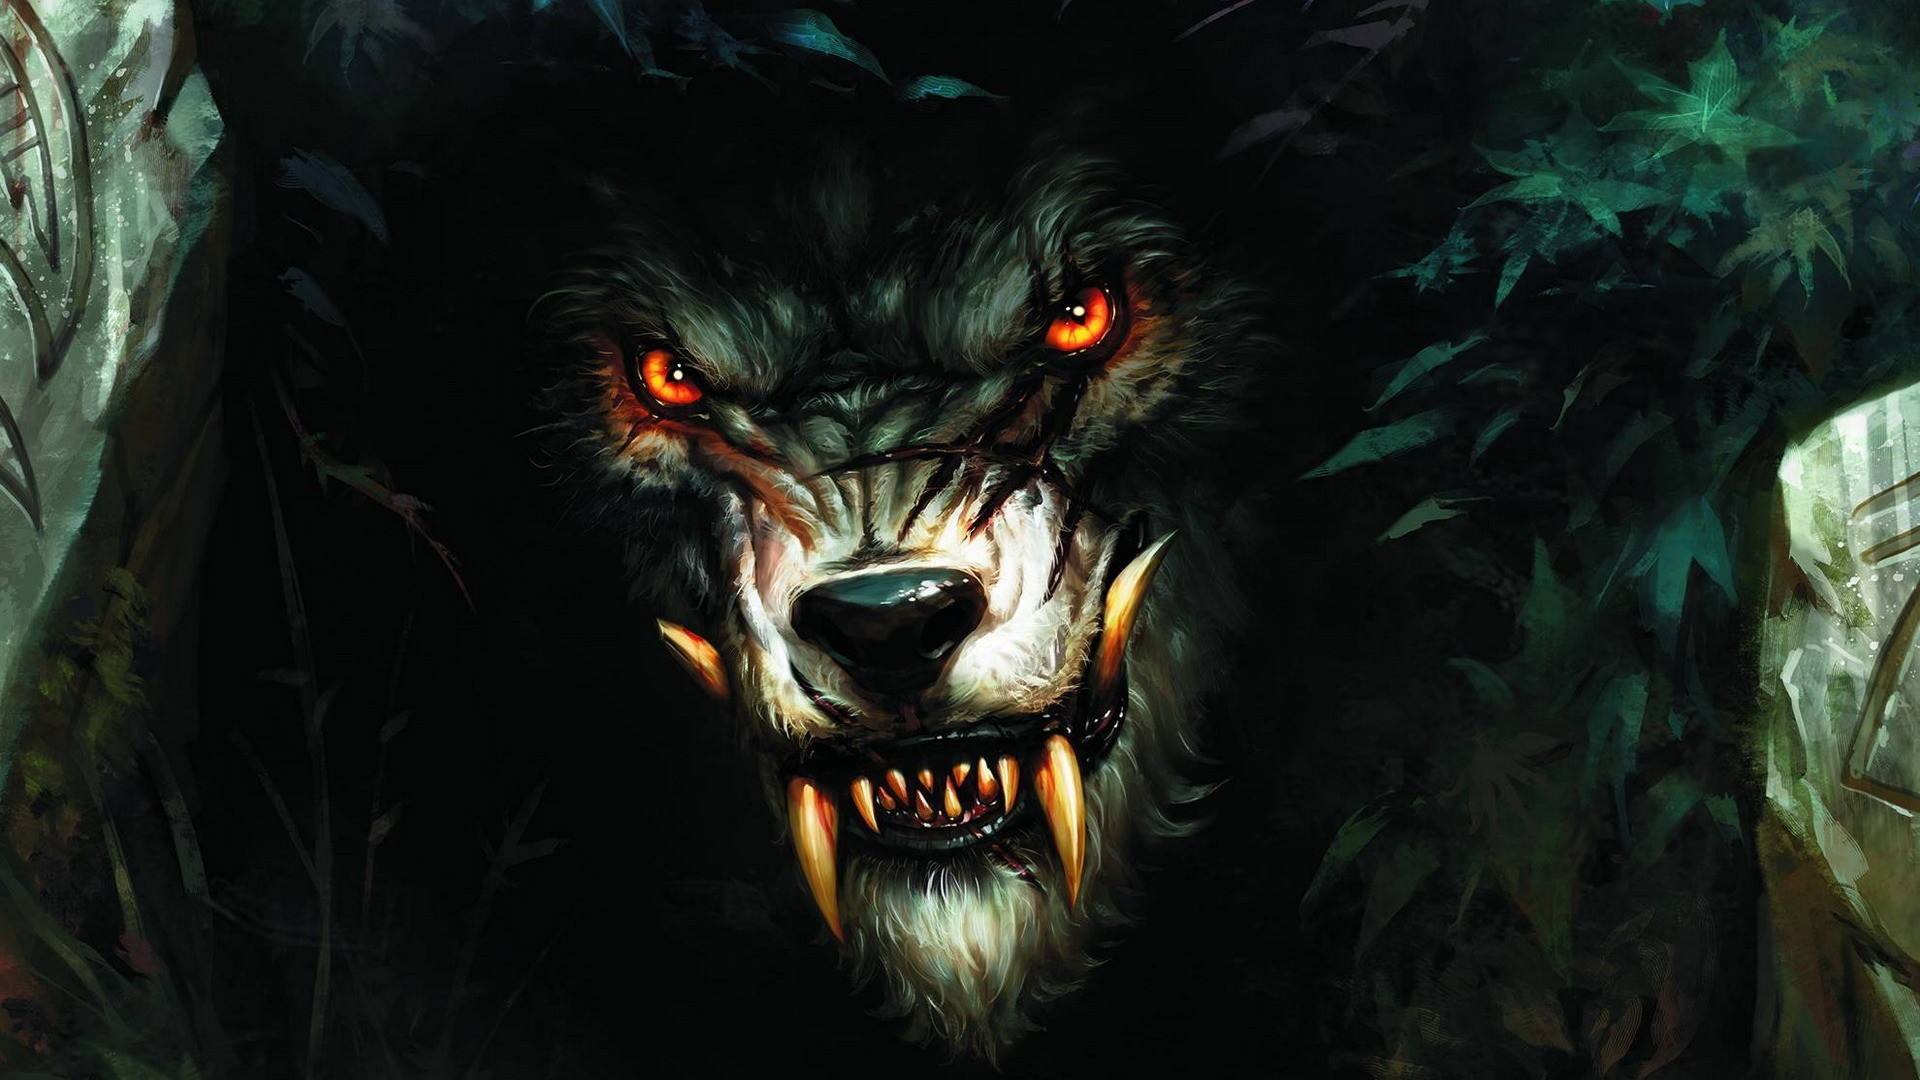 General 1920x1080 World of Warcraft wolf Worgen video games werewolves creature fantasy art PC gaming video game art glowing eyes